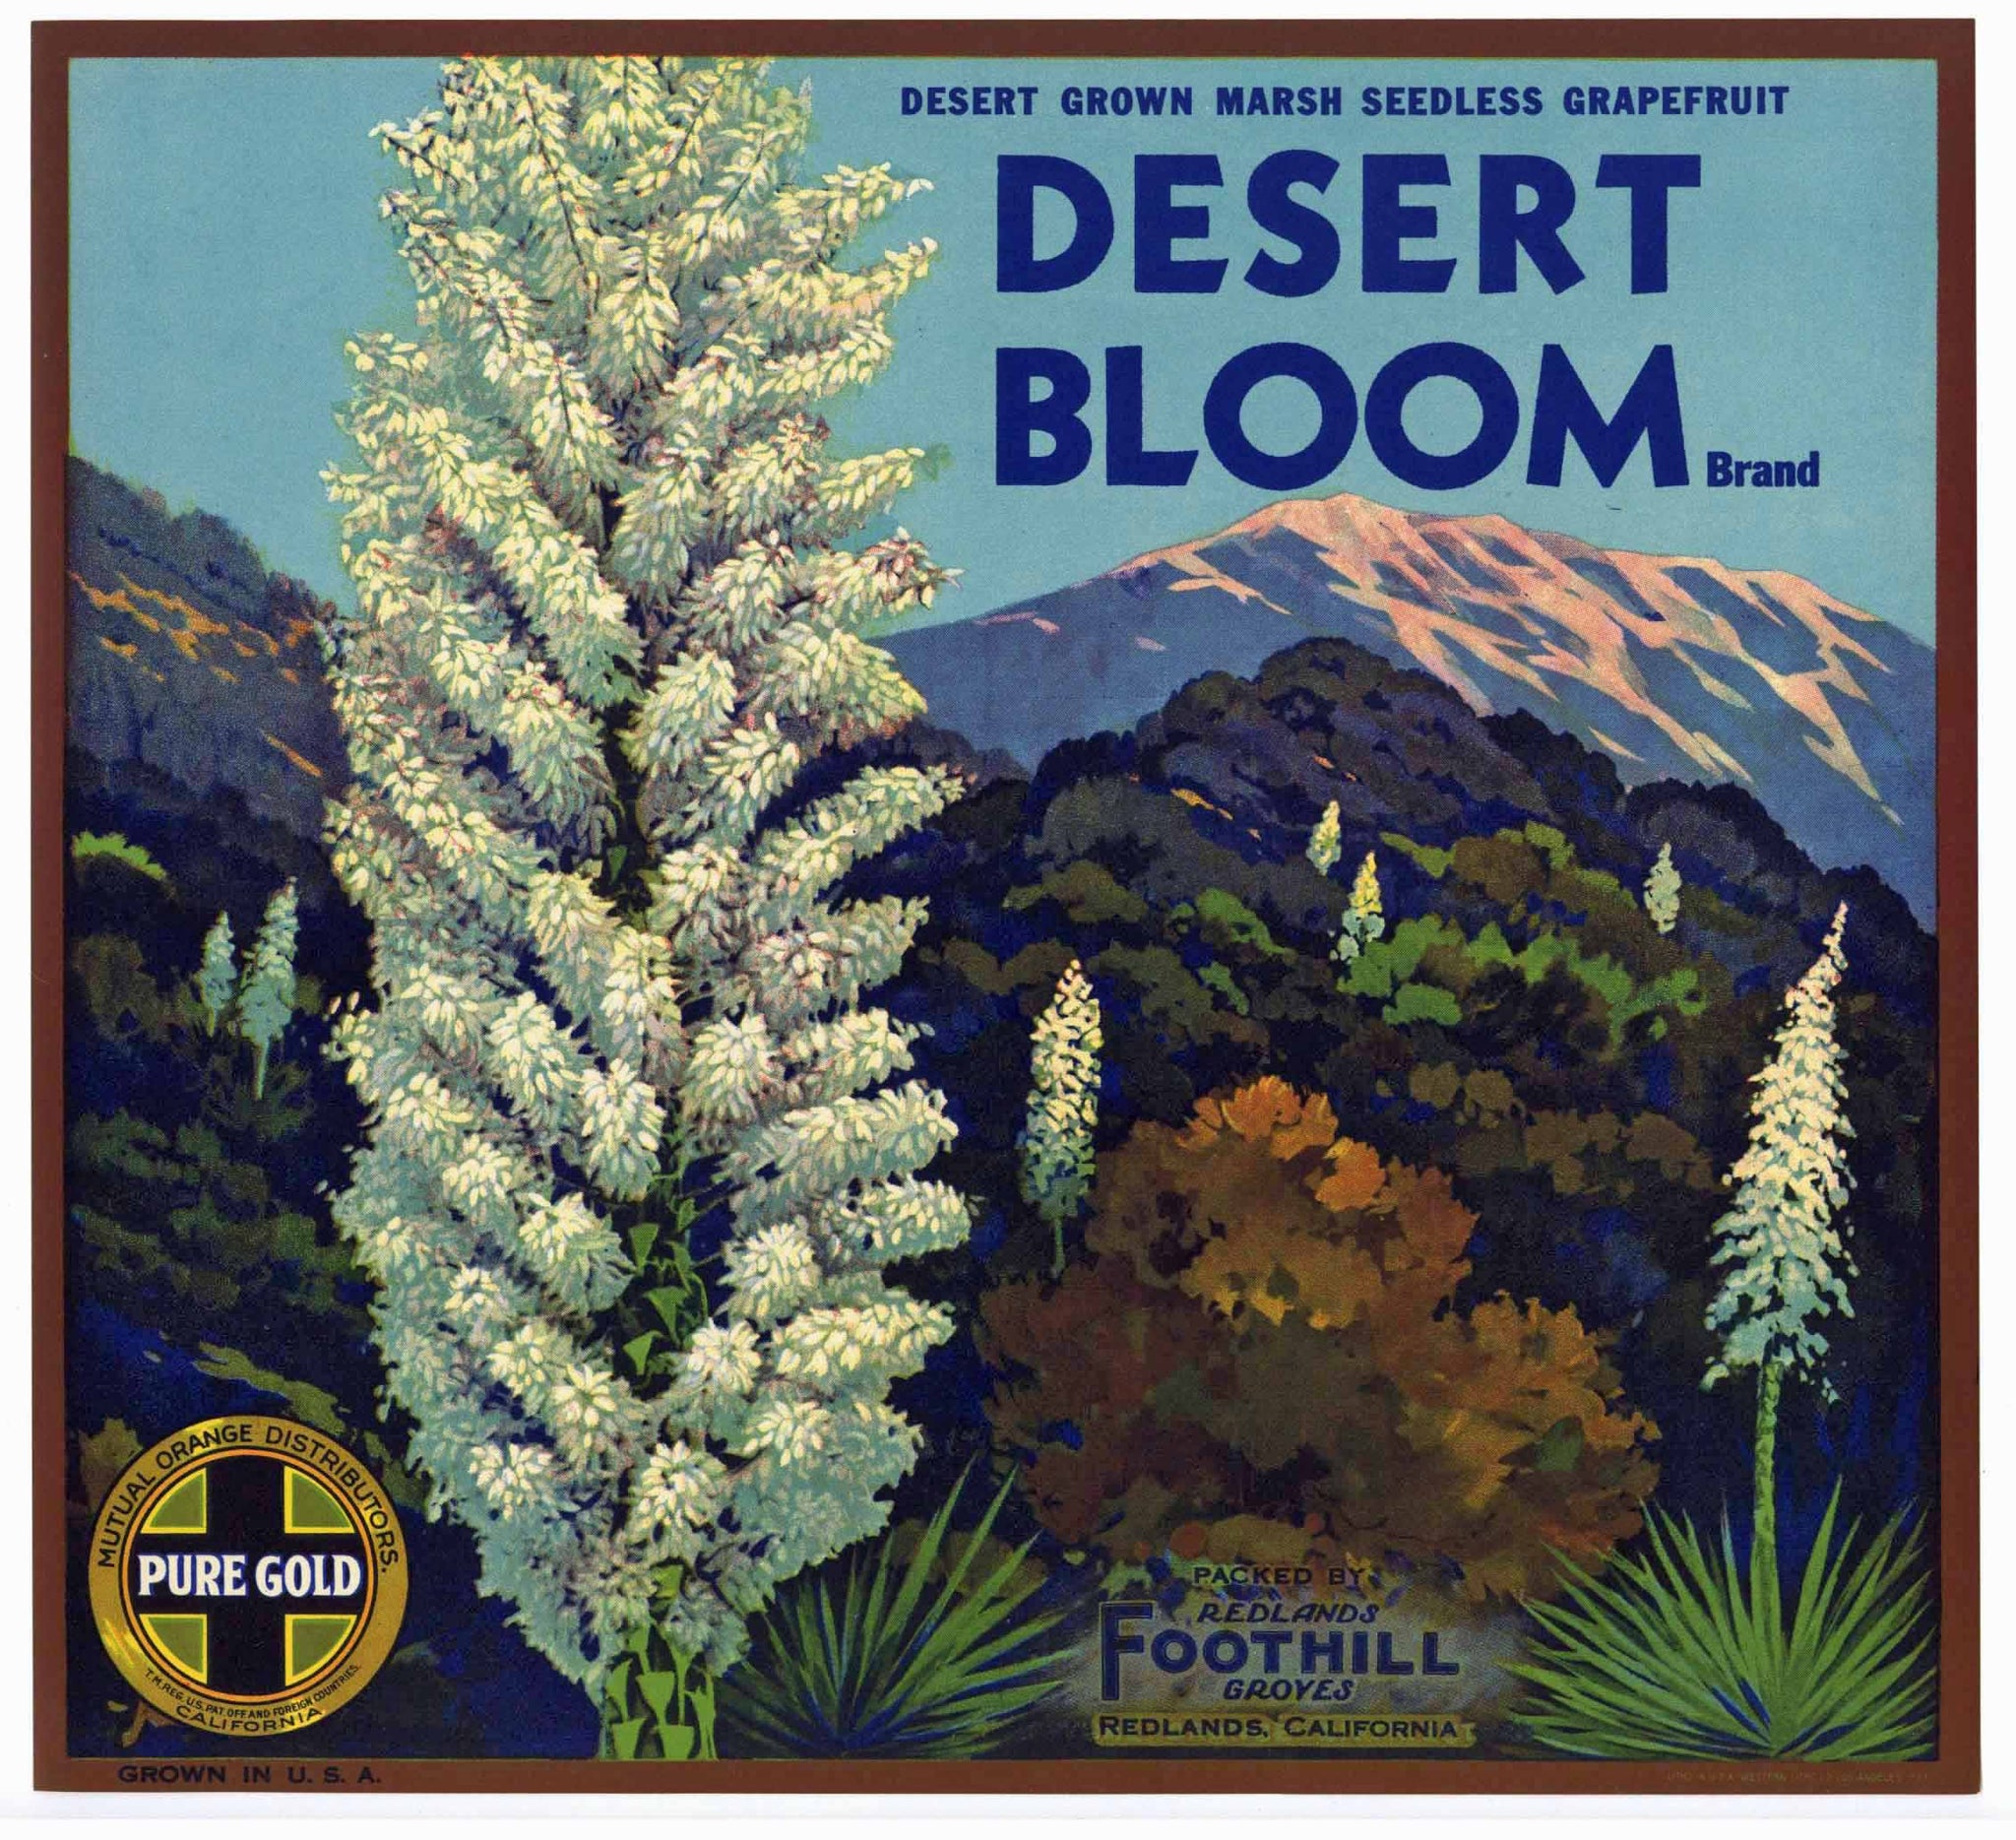 Desert Bloom Brand Vintage Grapefruit Crate Label, Marsh